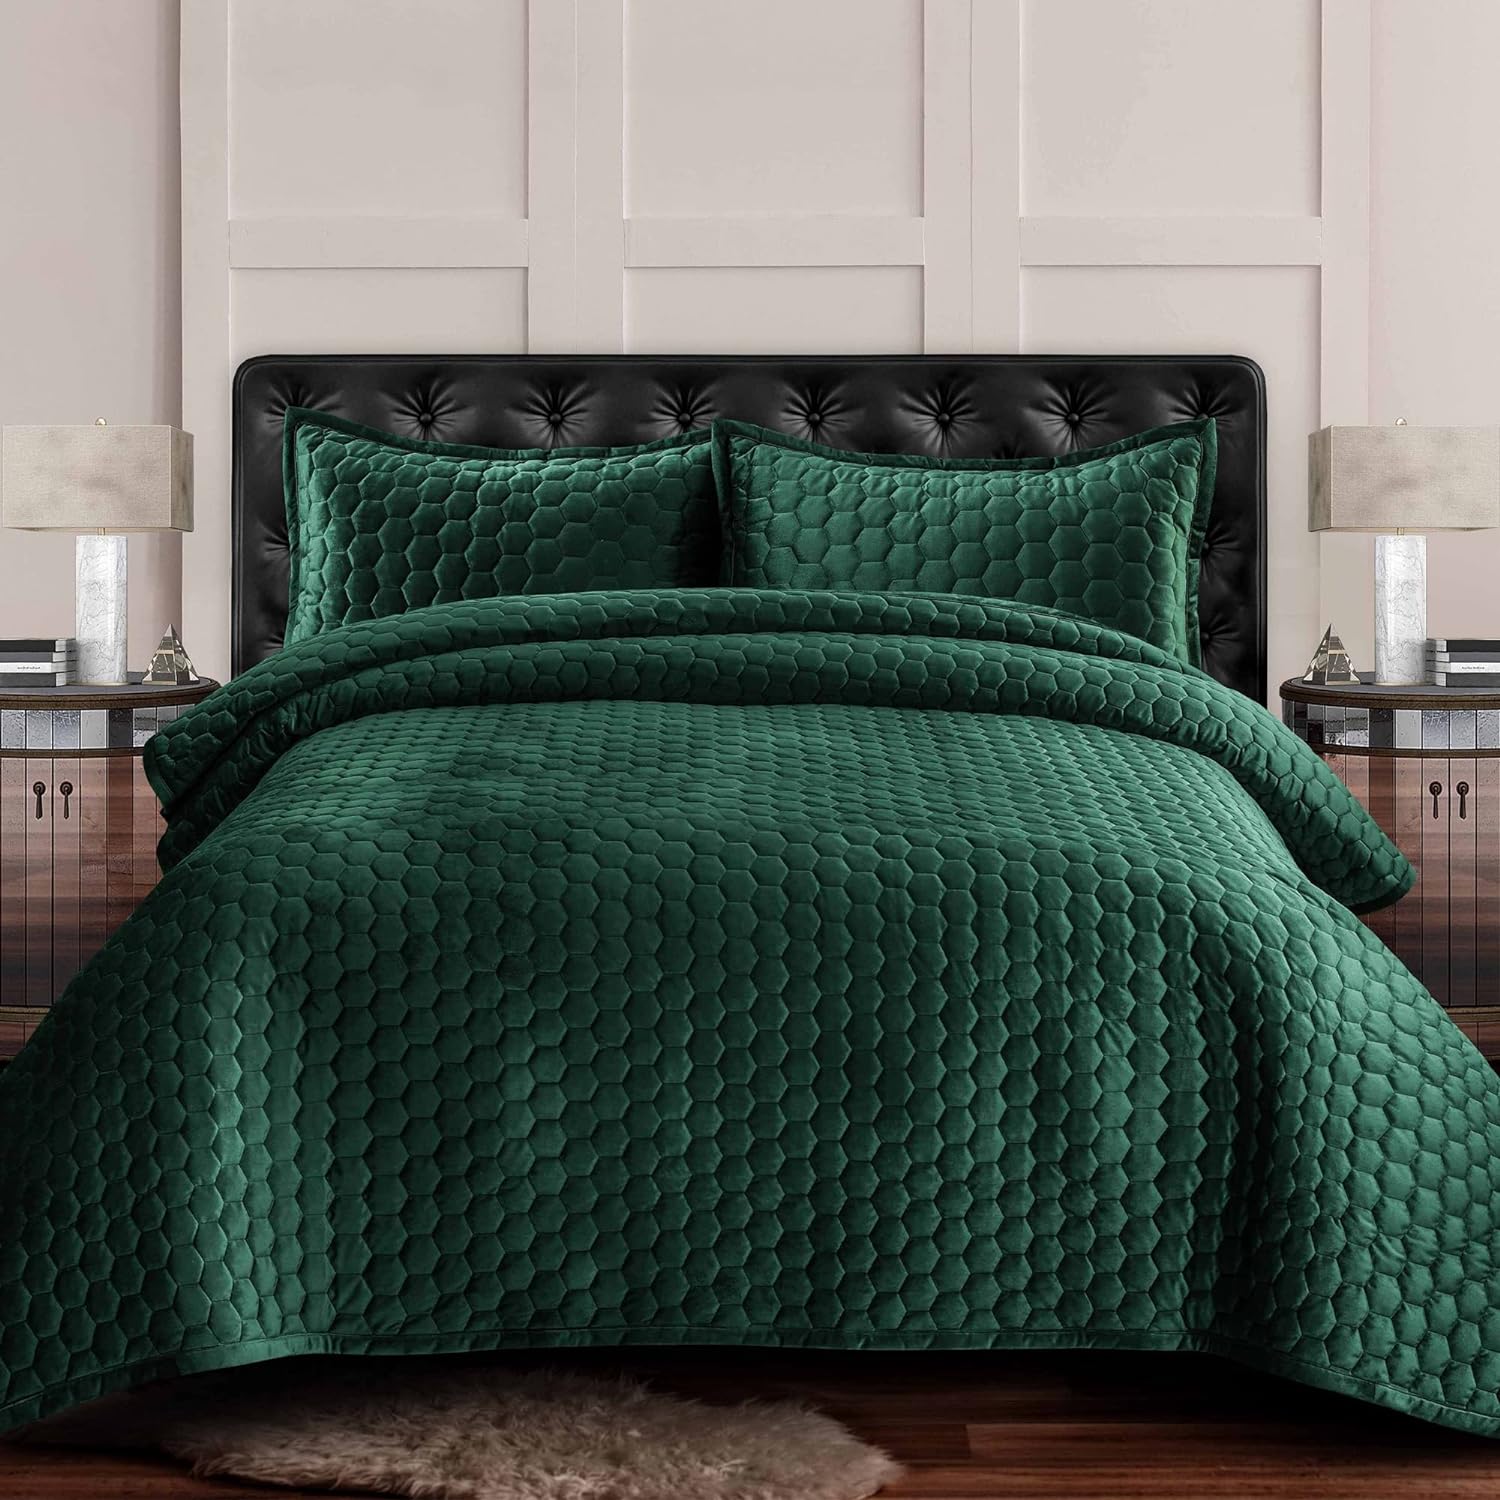 Tribeca Living Velvet Twin Quilt, Two-Piece Honeycomb Stitch Bedding Set Includes One Oversized Quilt & Sham Pillowcase, 260GSM Super Soft Velvet, Lugano/Teal